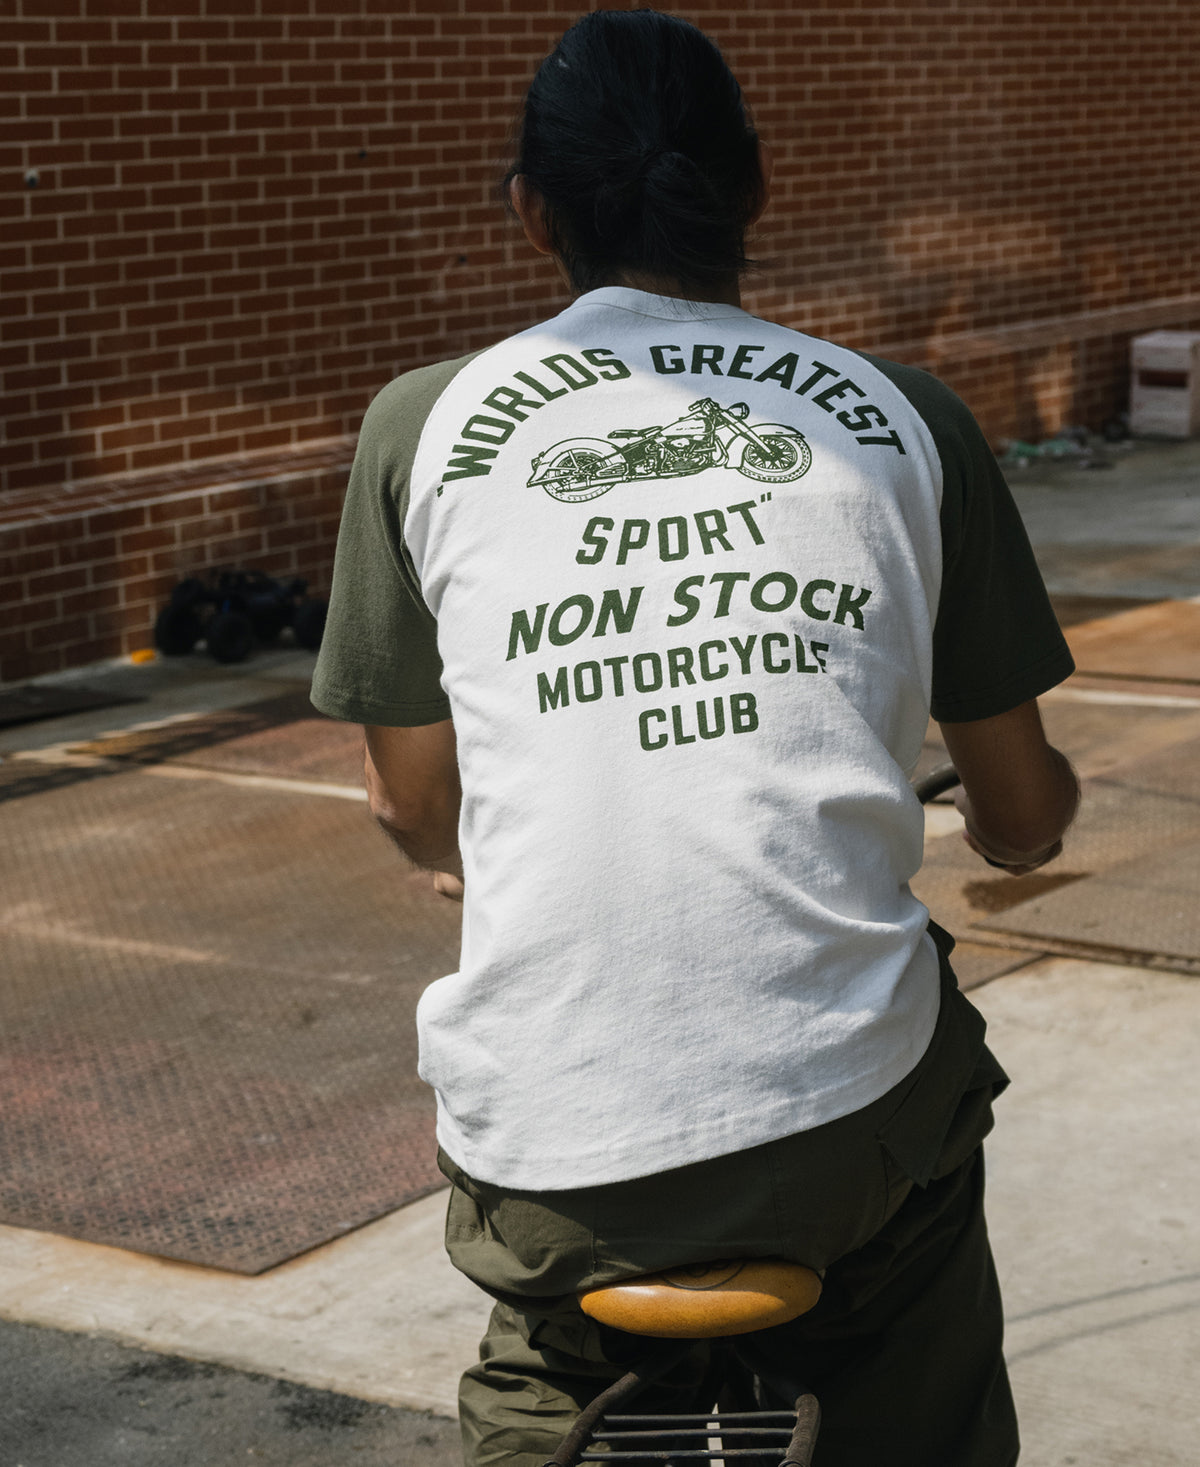 Two-Tone Rider Printed Raglan Sleeve T-Shirt - Green/White